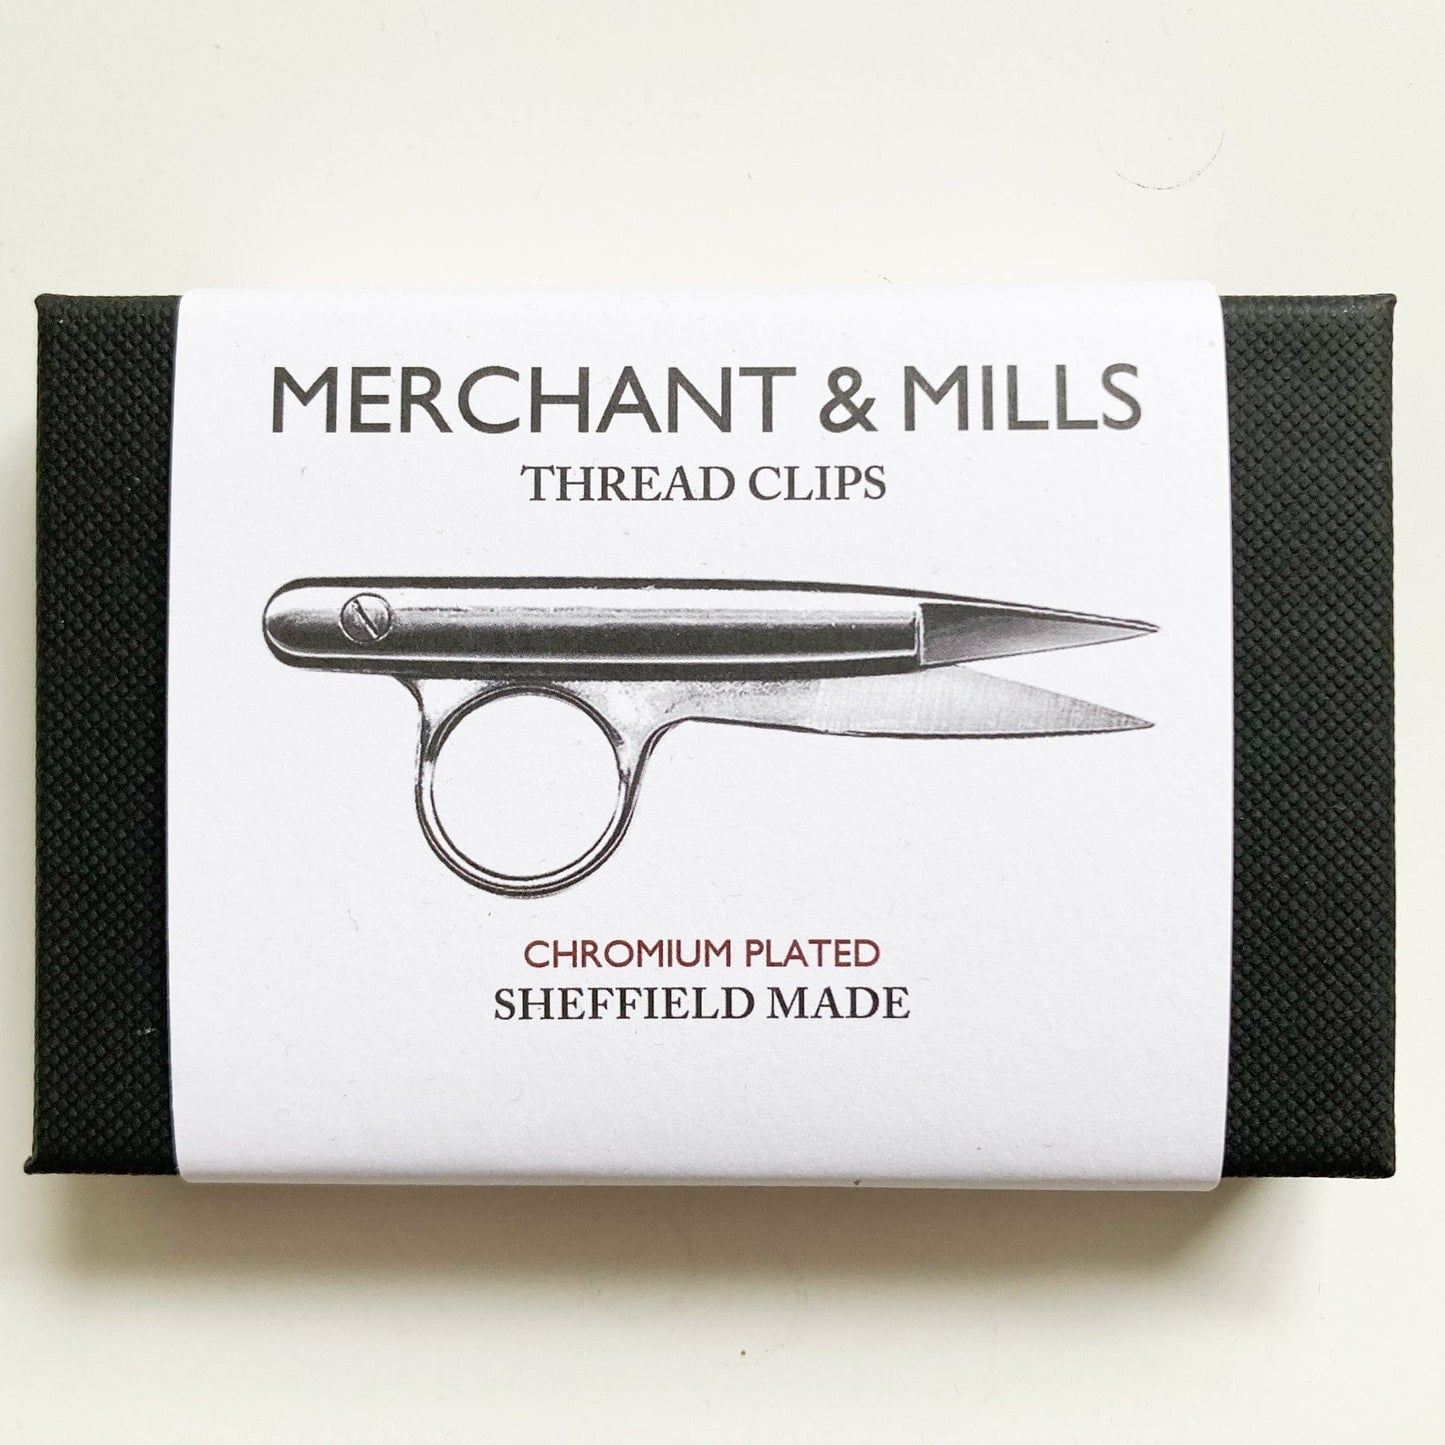 Merchant & Mills Thread Clips